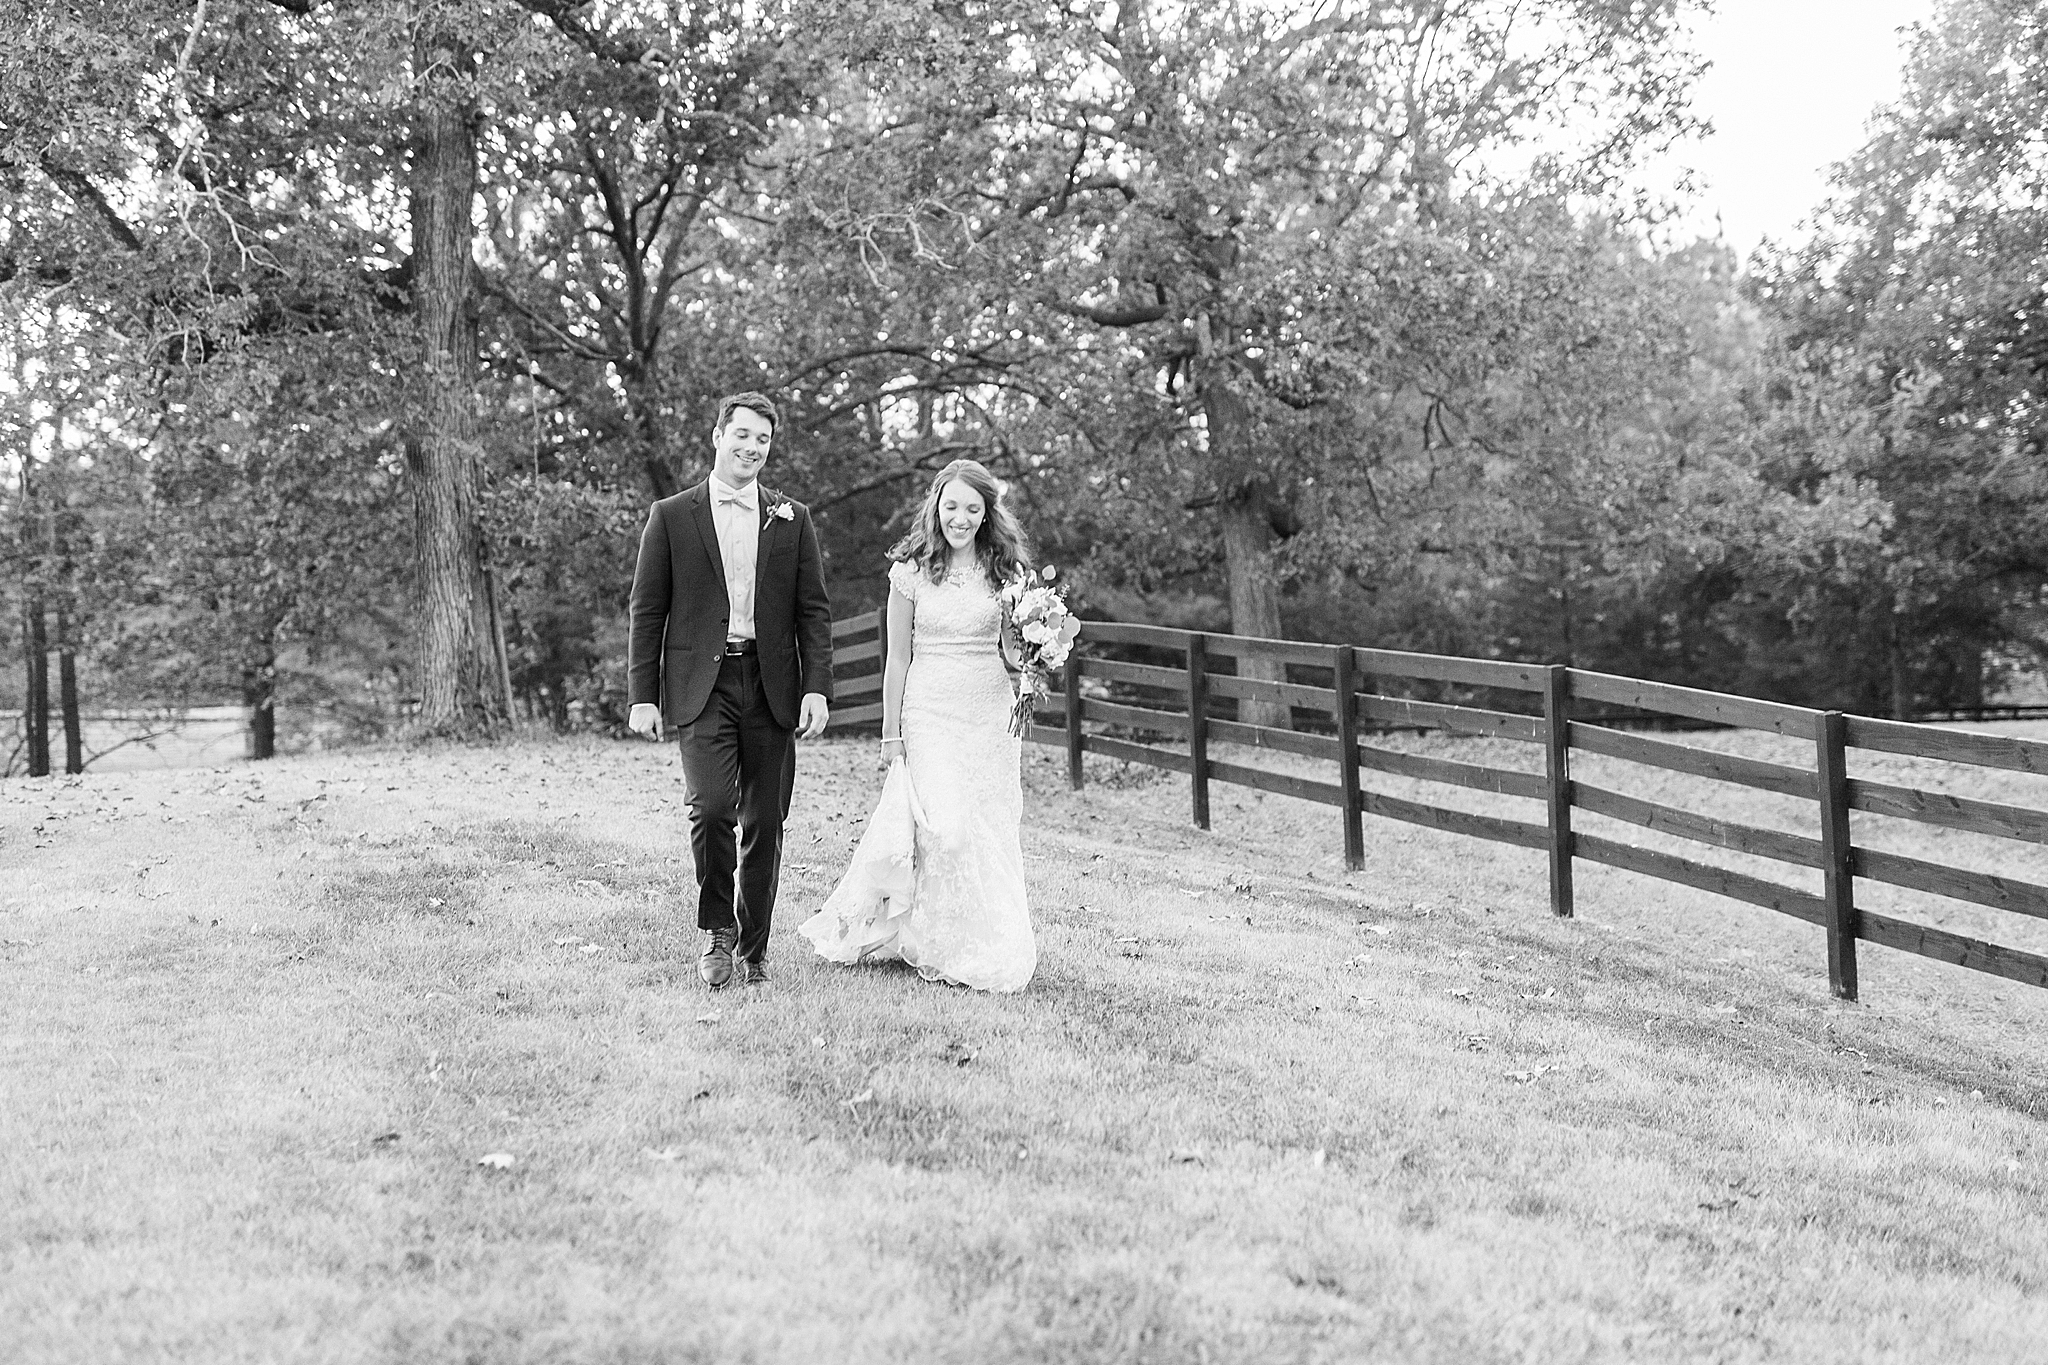 Warrenton NC wedding portraits along fence